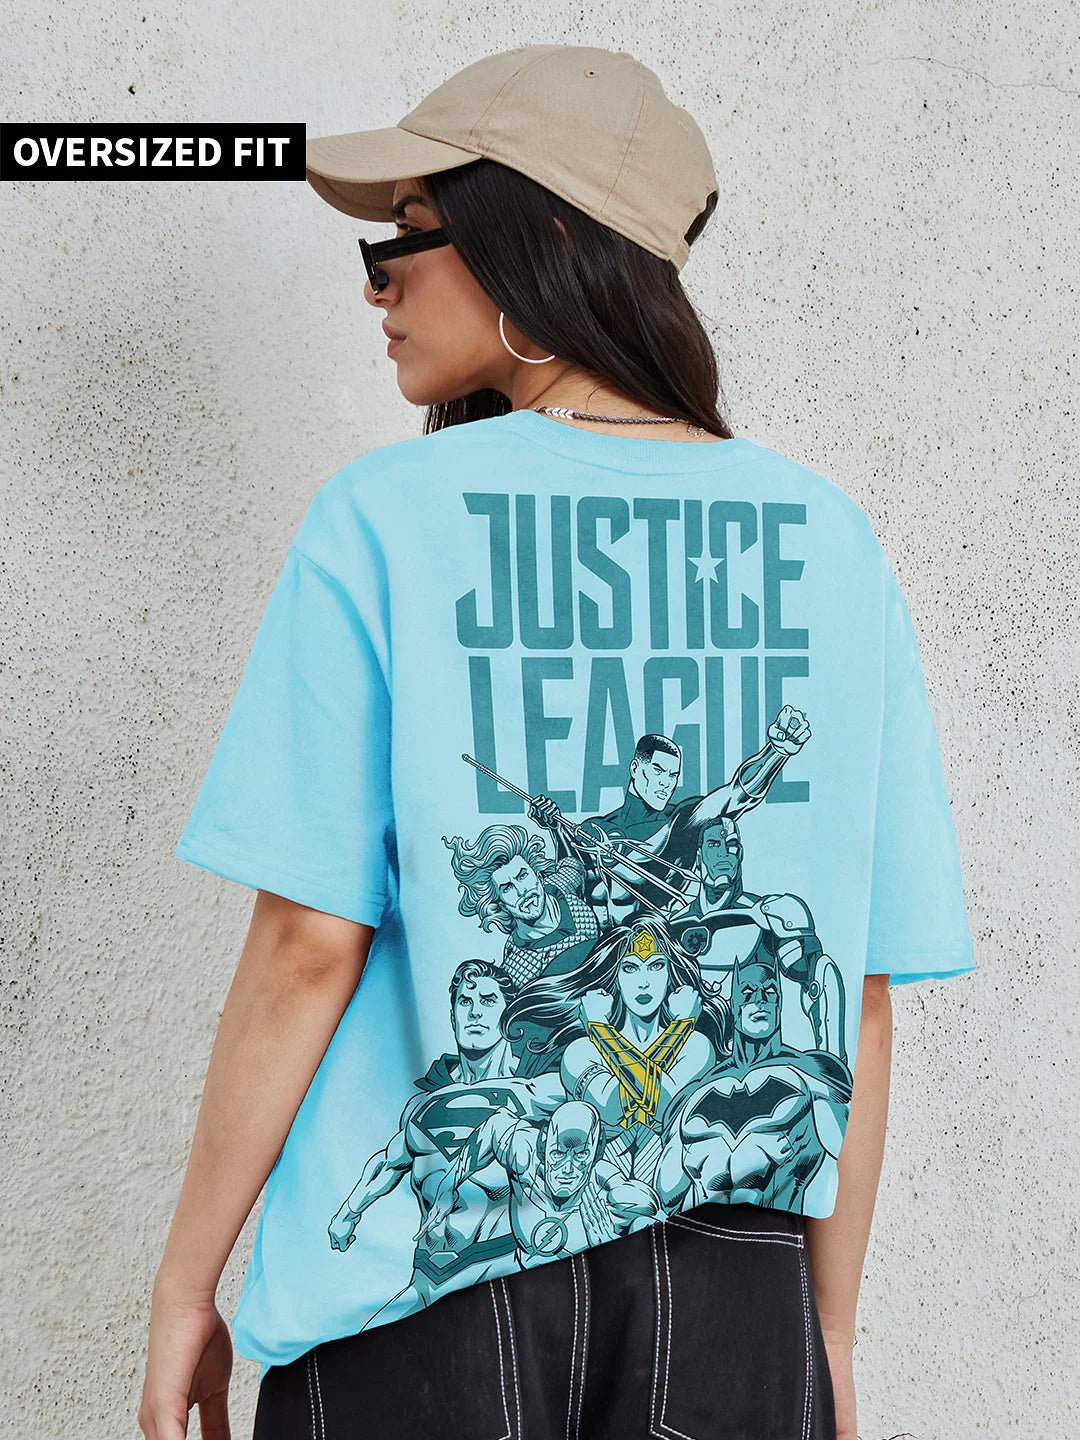 Justice League Legendary (UK version)